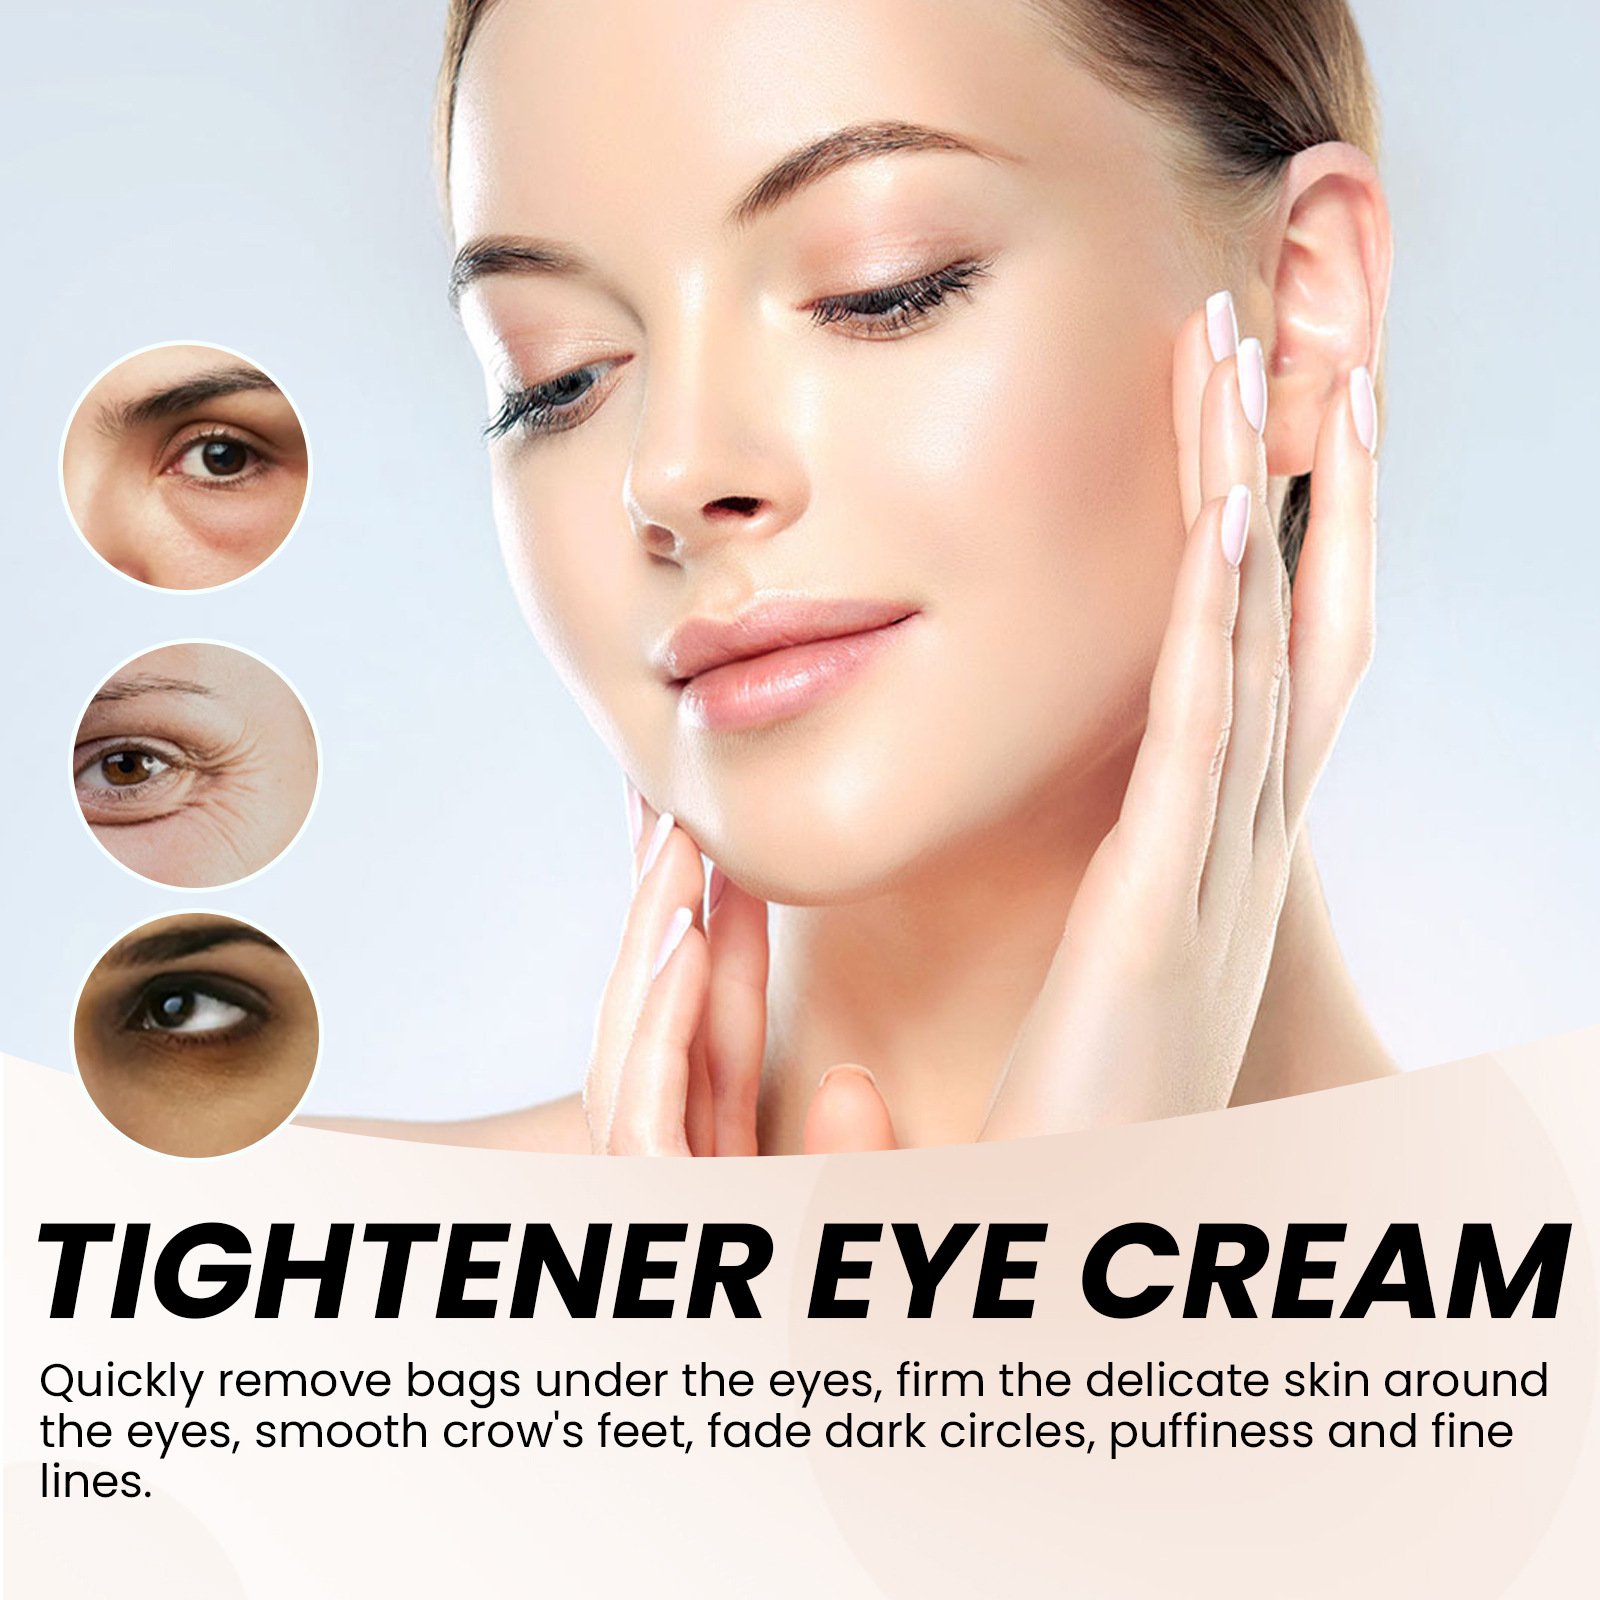 Temporary Firming Eye Cream (Video of the same eye cream)